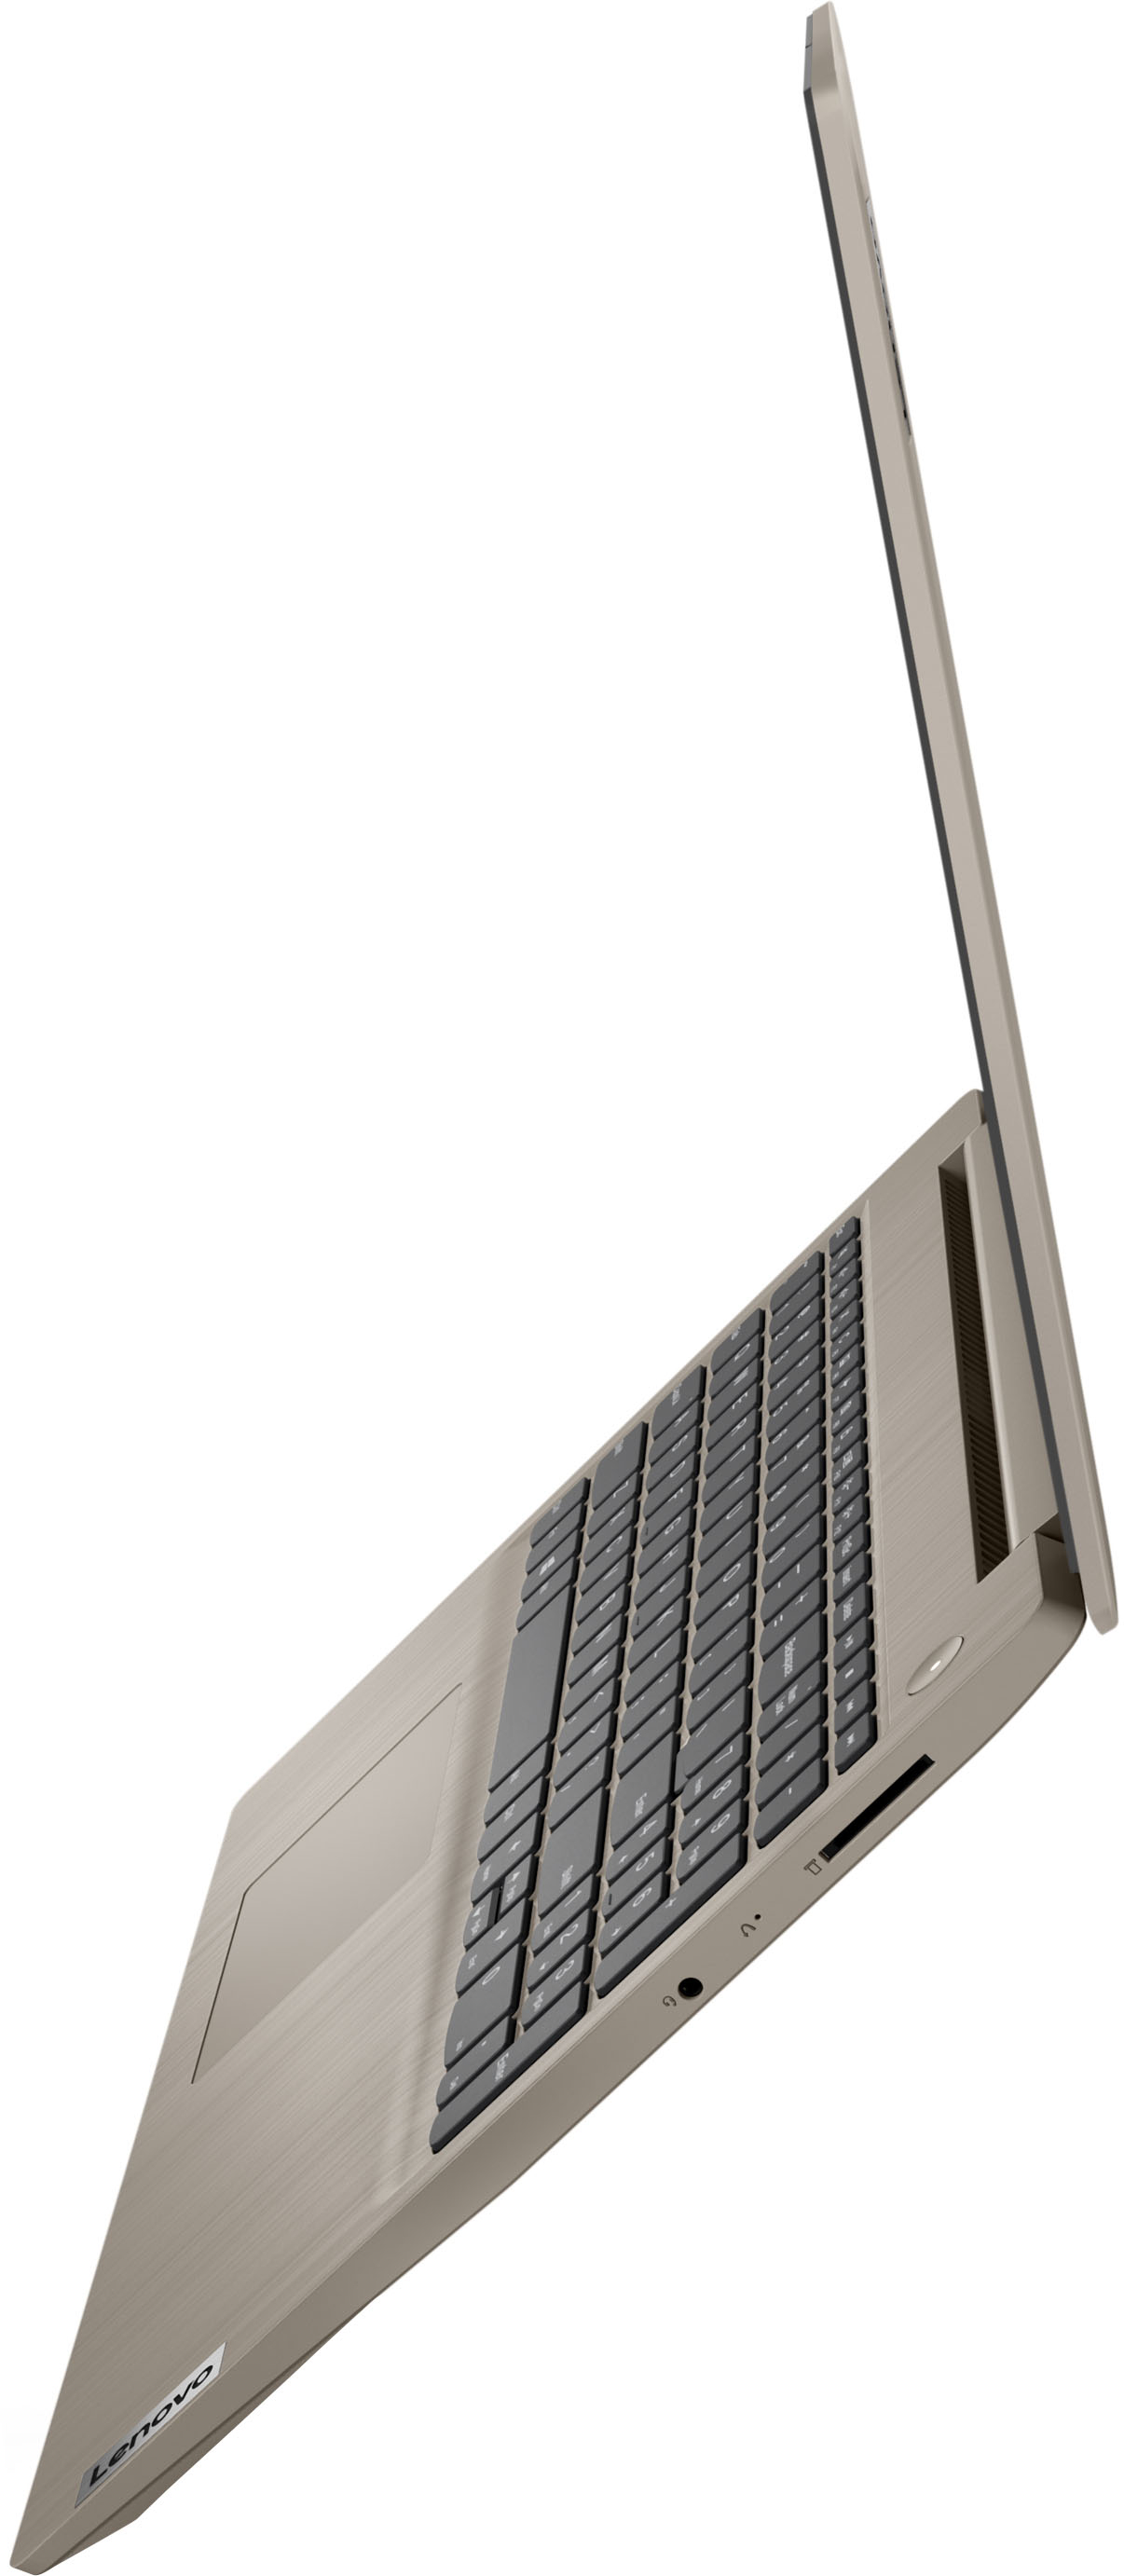 Lenovo IdeaPad 3 15 HD Touch Screen Laptop Intel Core i3-1115G4 Intel UHD  Graphics 8GB Memory 256GB SSD Almond 81X800KLUS - Best Buy